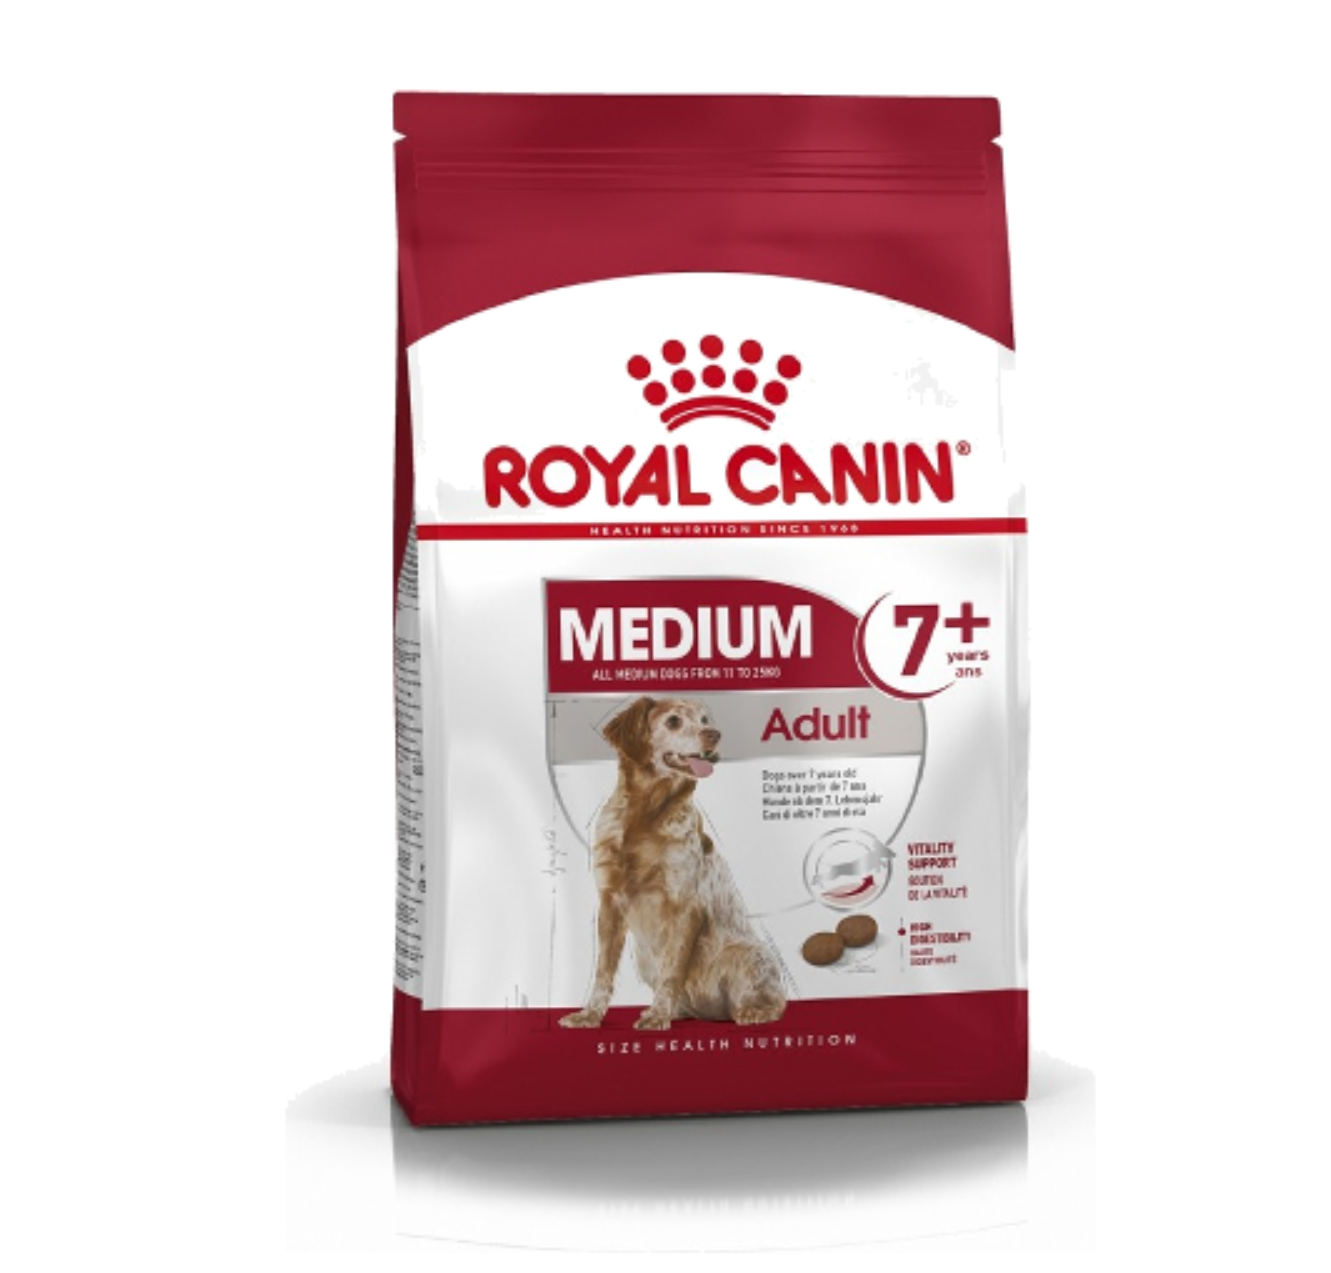 Royal Canin Medium Adult 7+ Dog Food